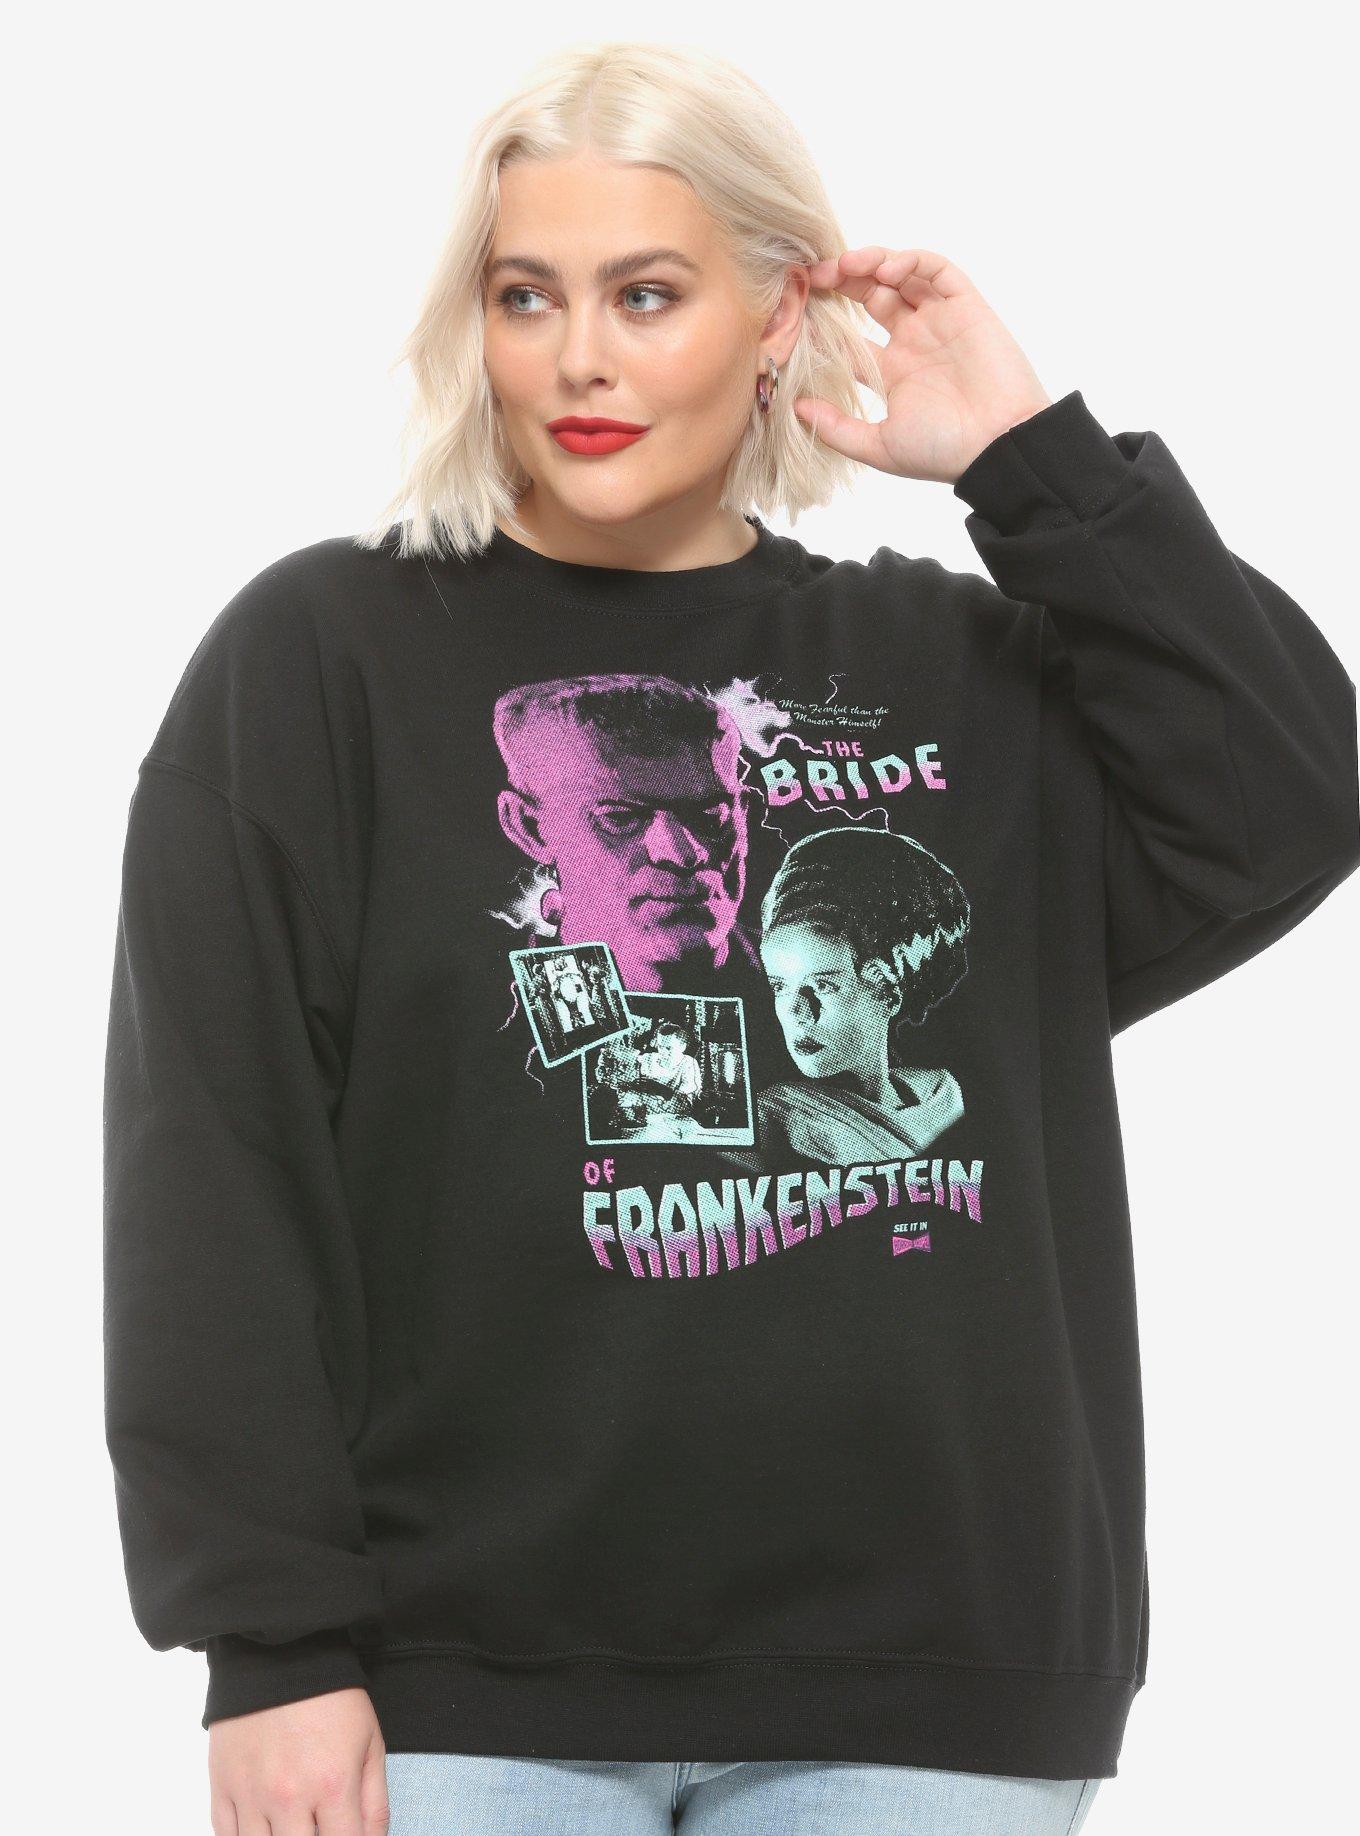 Universal Monsters The Bride Of Frankenstein Poster Girls Sweatshirt Plus Size, MULTI, hi-res